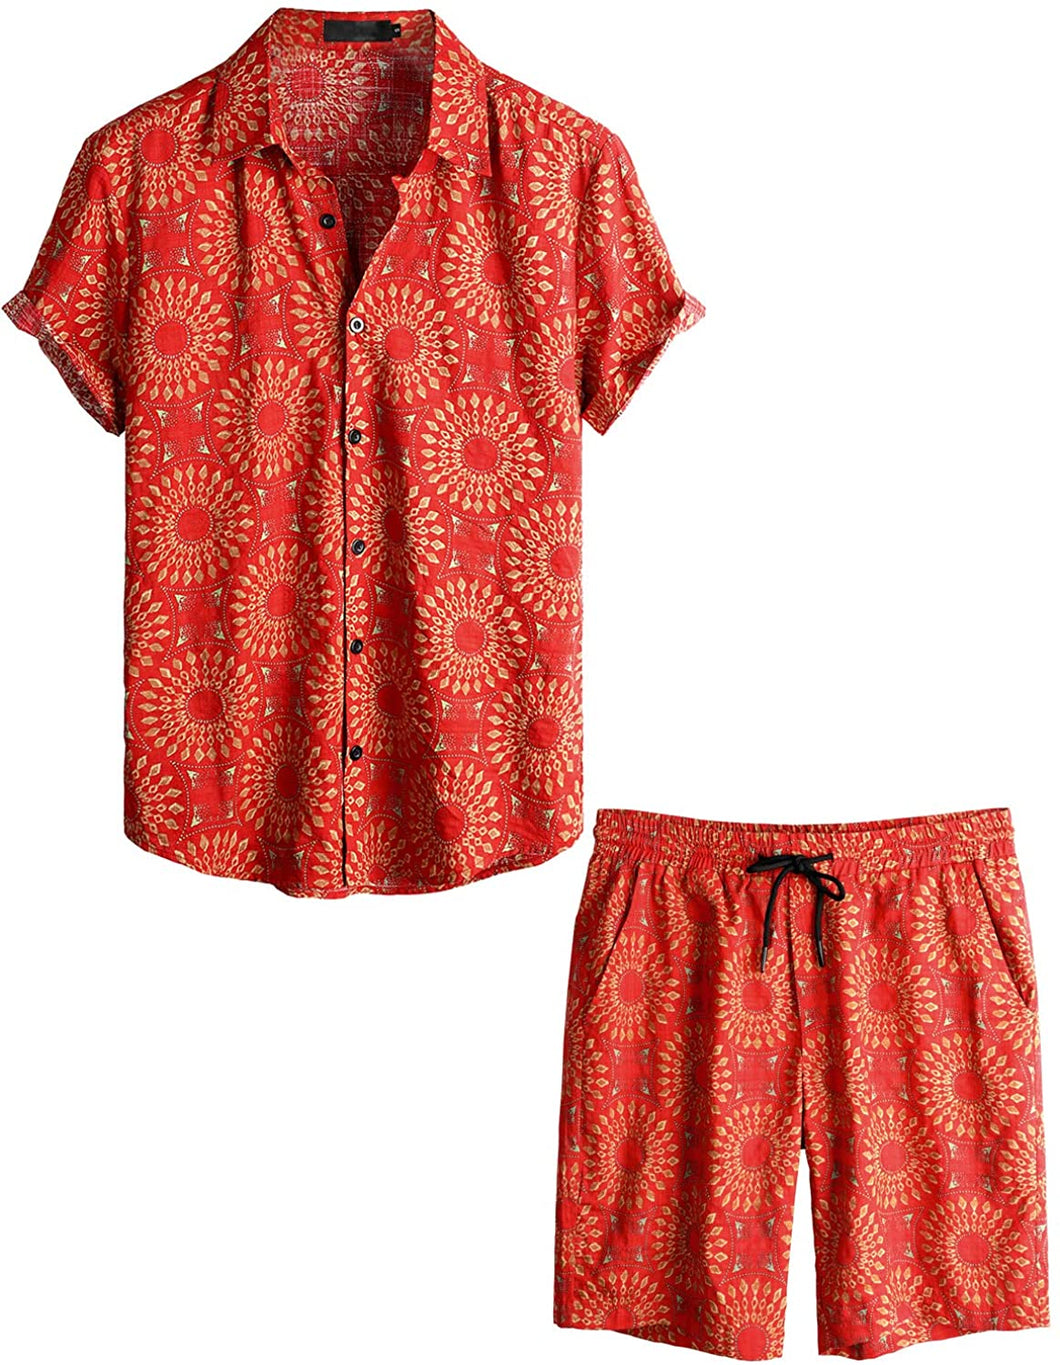 Men's Orange Printed Bohemian Short Sleeve Shirt & Shorts Set